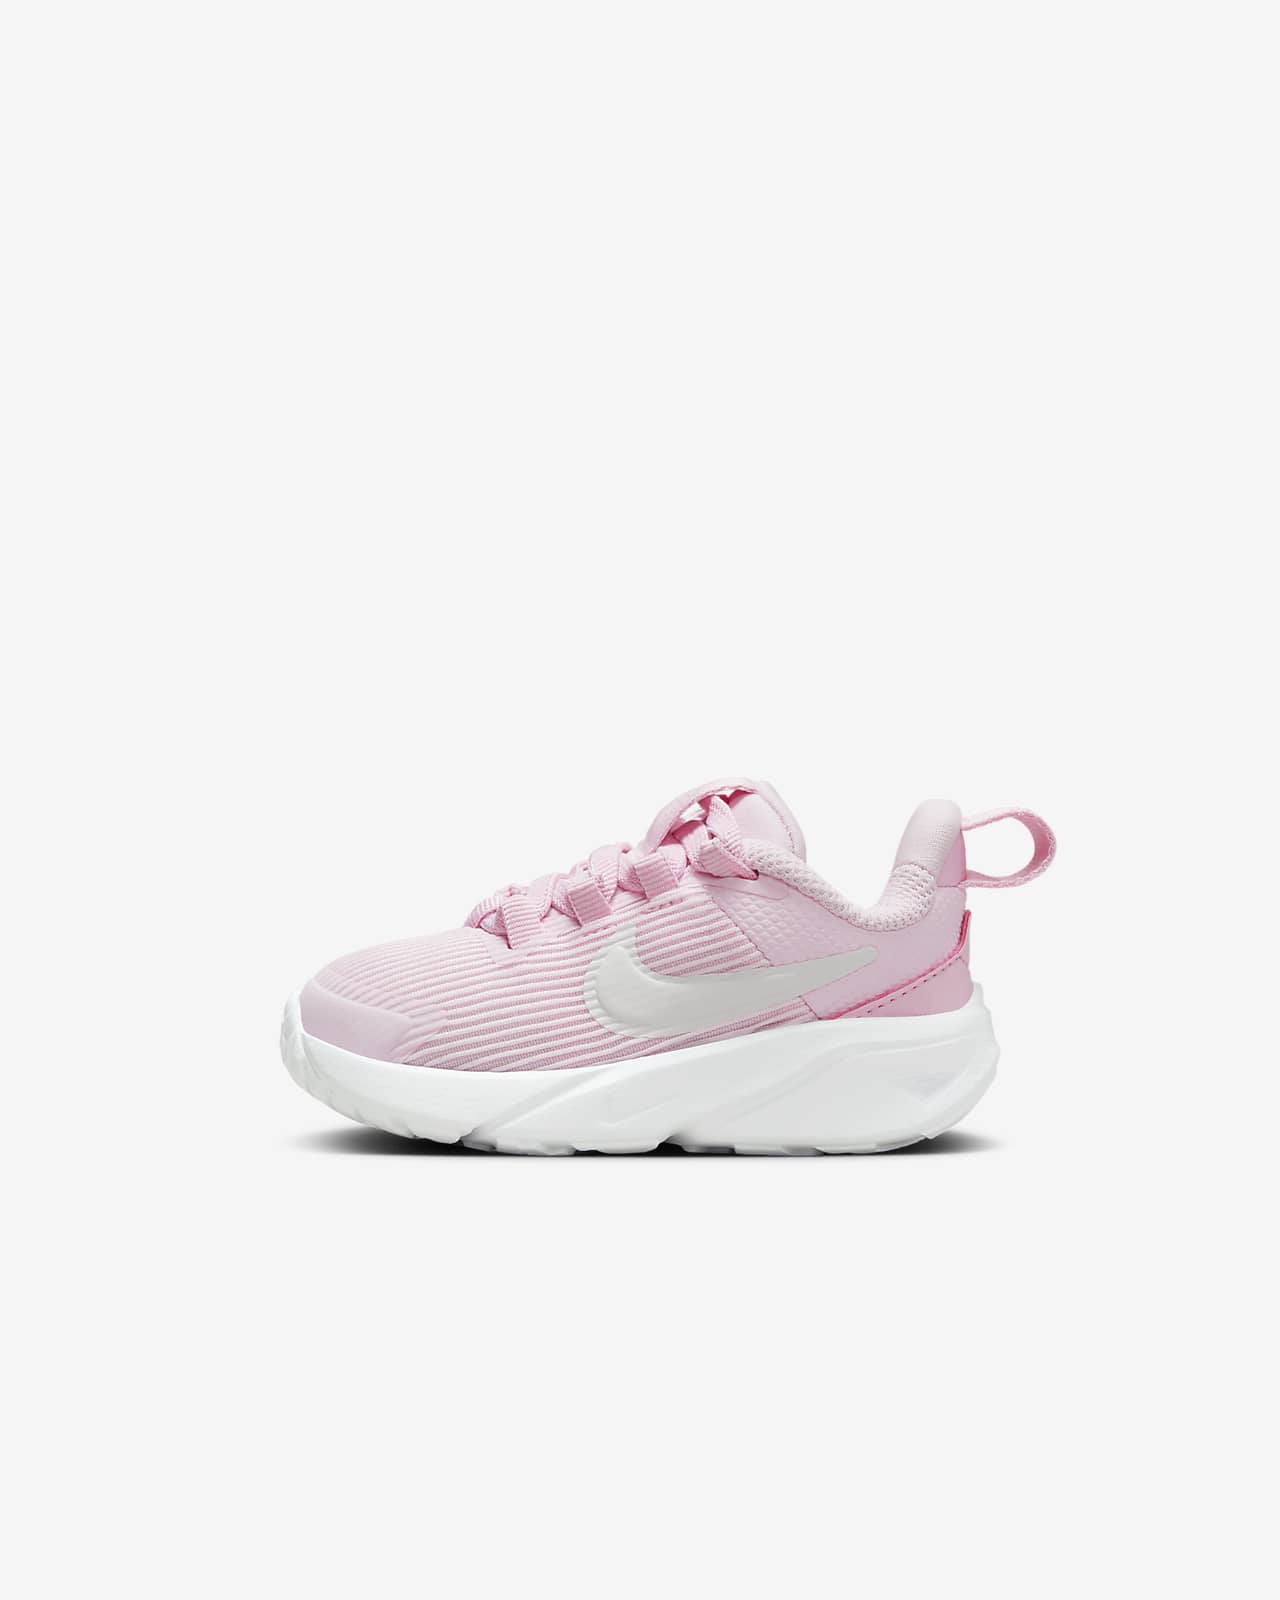 Star Nike 4 Shoes. Baby/Toddler Runner